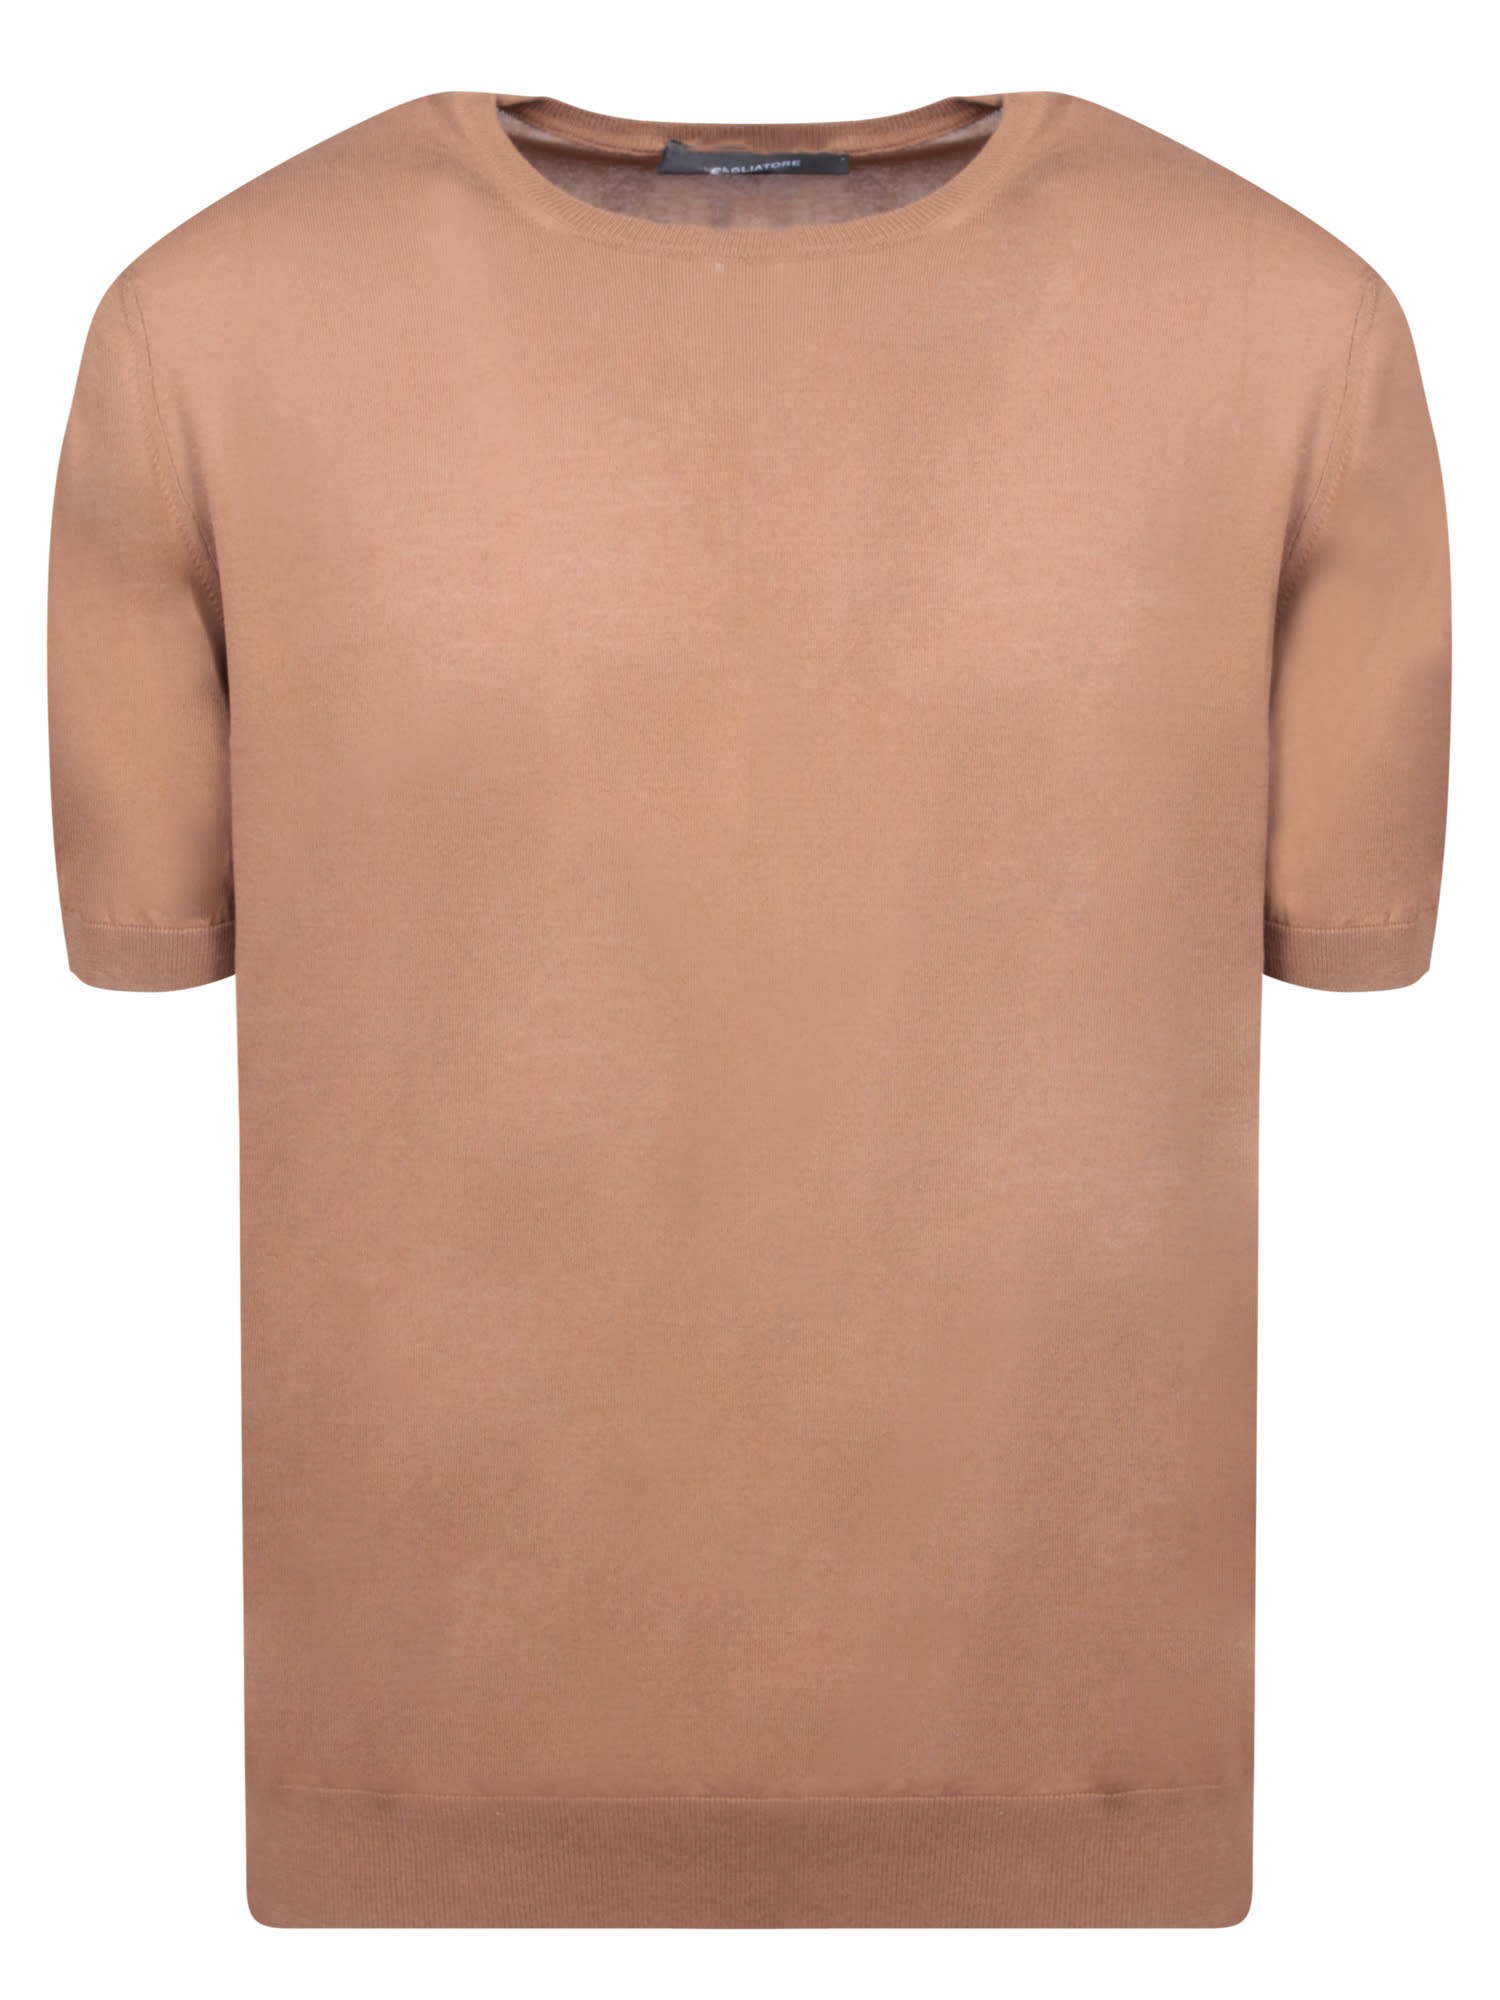 Short Sleeves Brown T-shirt